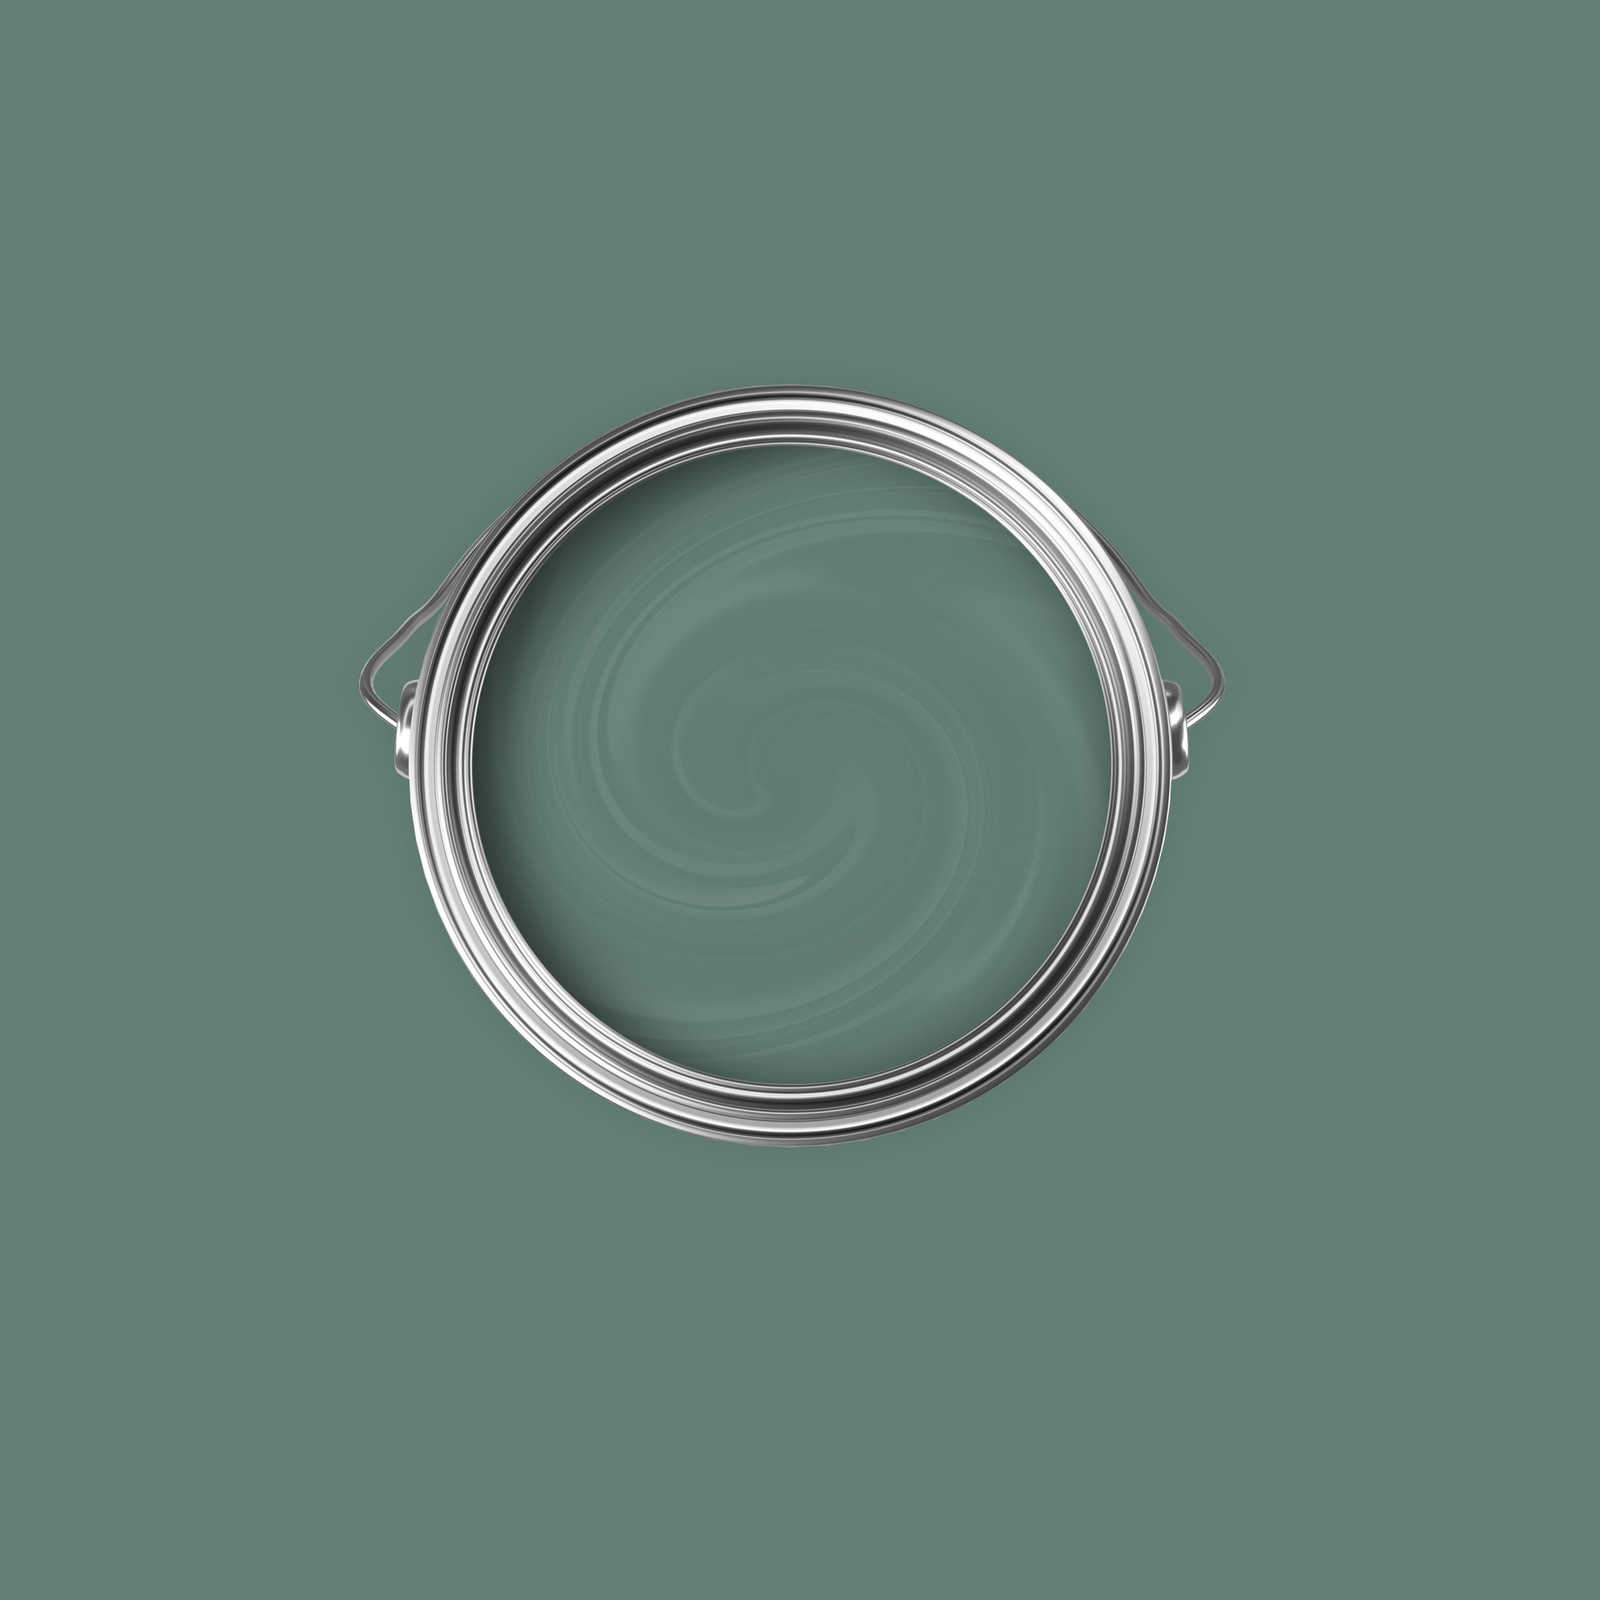             Premium Wall Paint Calm Eucalyptus »Expressive Emerald« NW410 – 2.5 litre
        